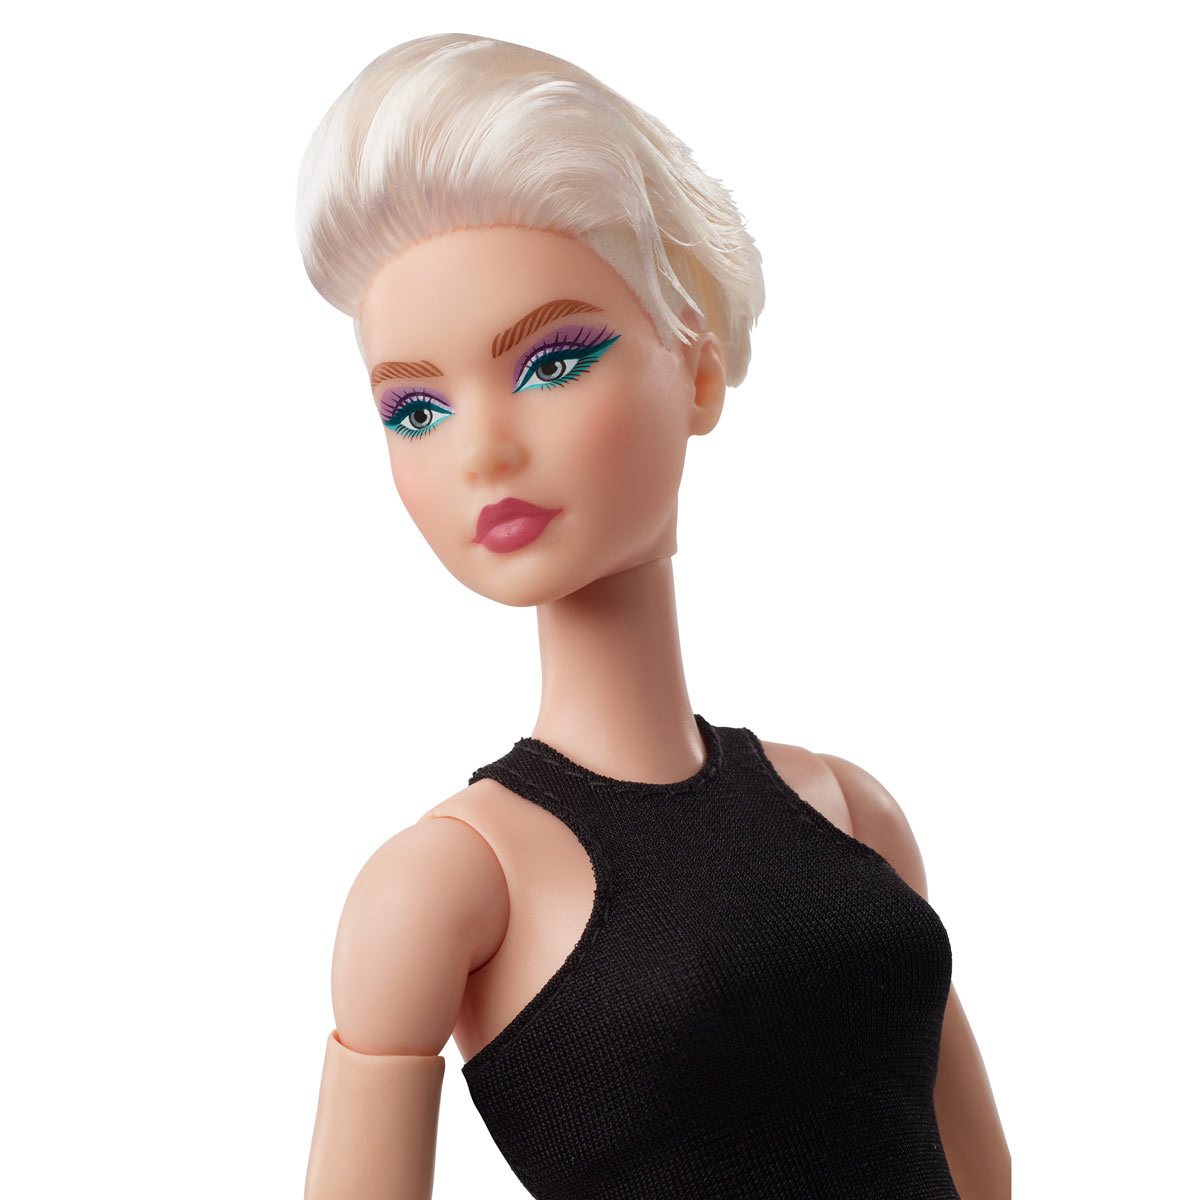 Barbie Looks #8 Doll with Original Short Hair